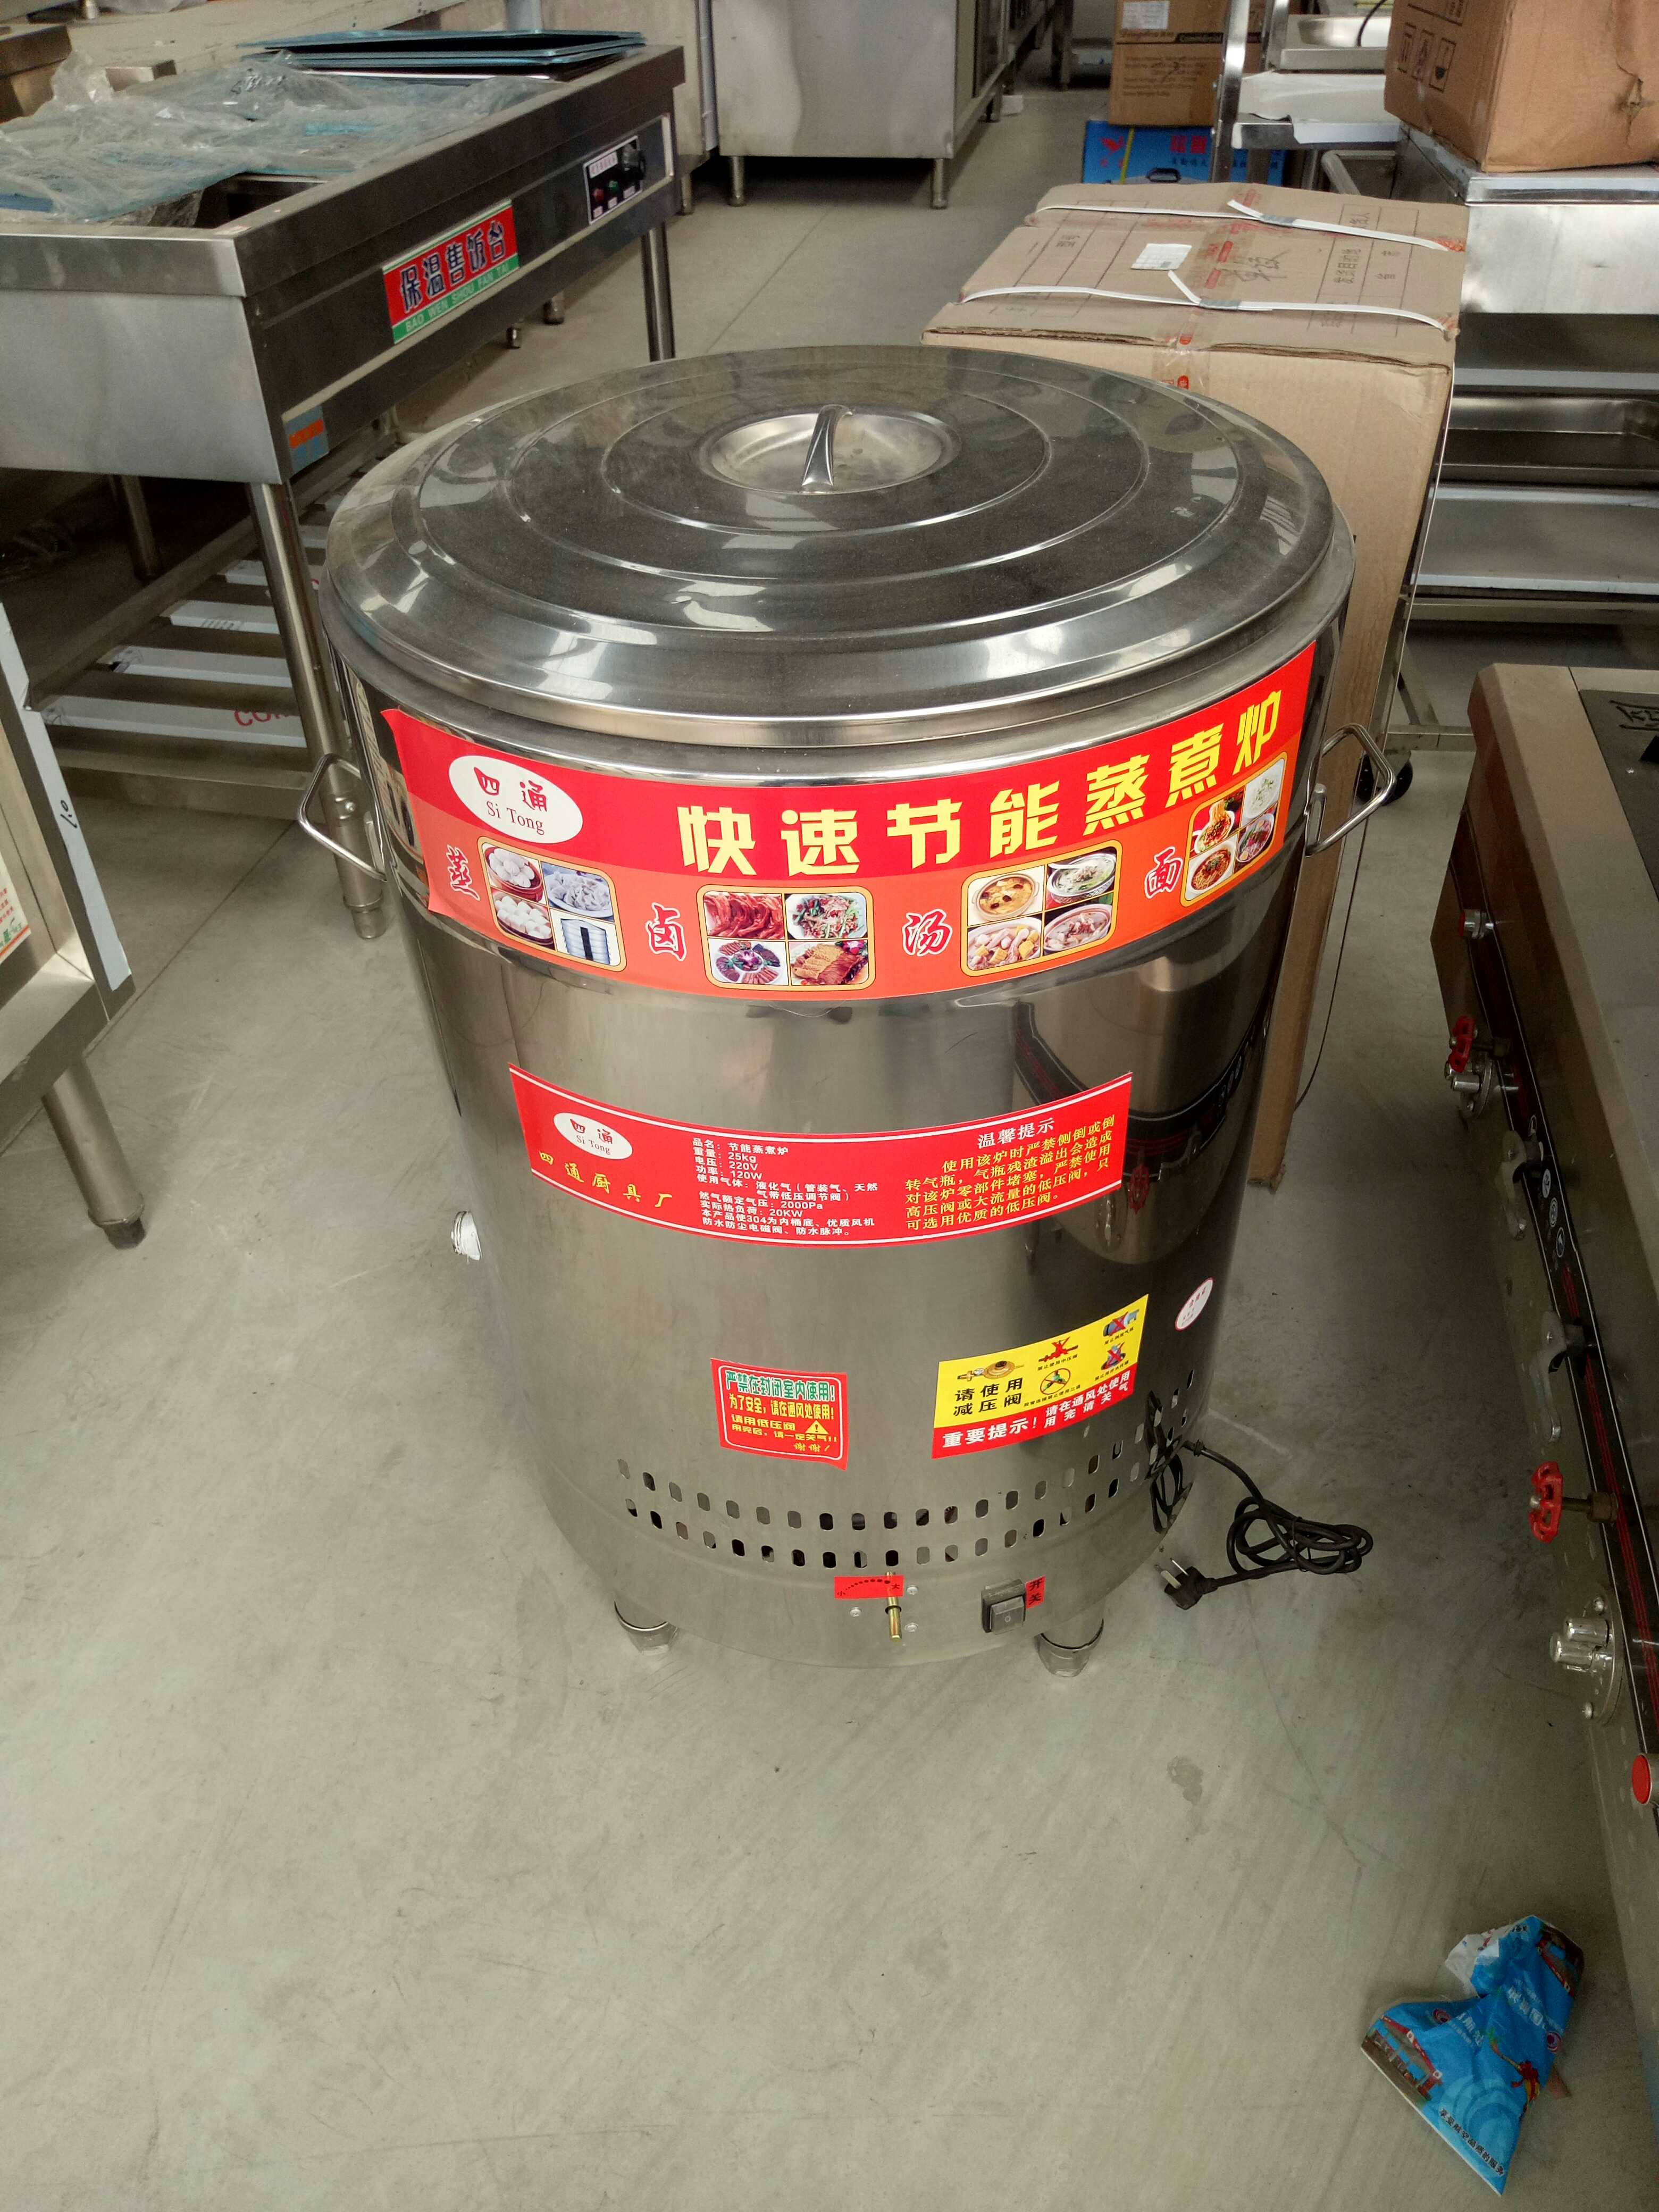 50cm双层保温桶圆管燃气煮面炉 商用汤炉煮面桶汤面炉串串冒菜桶